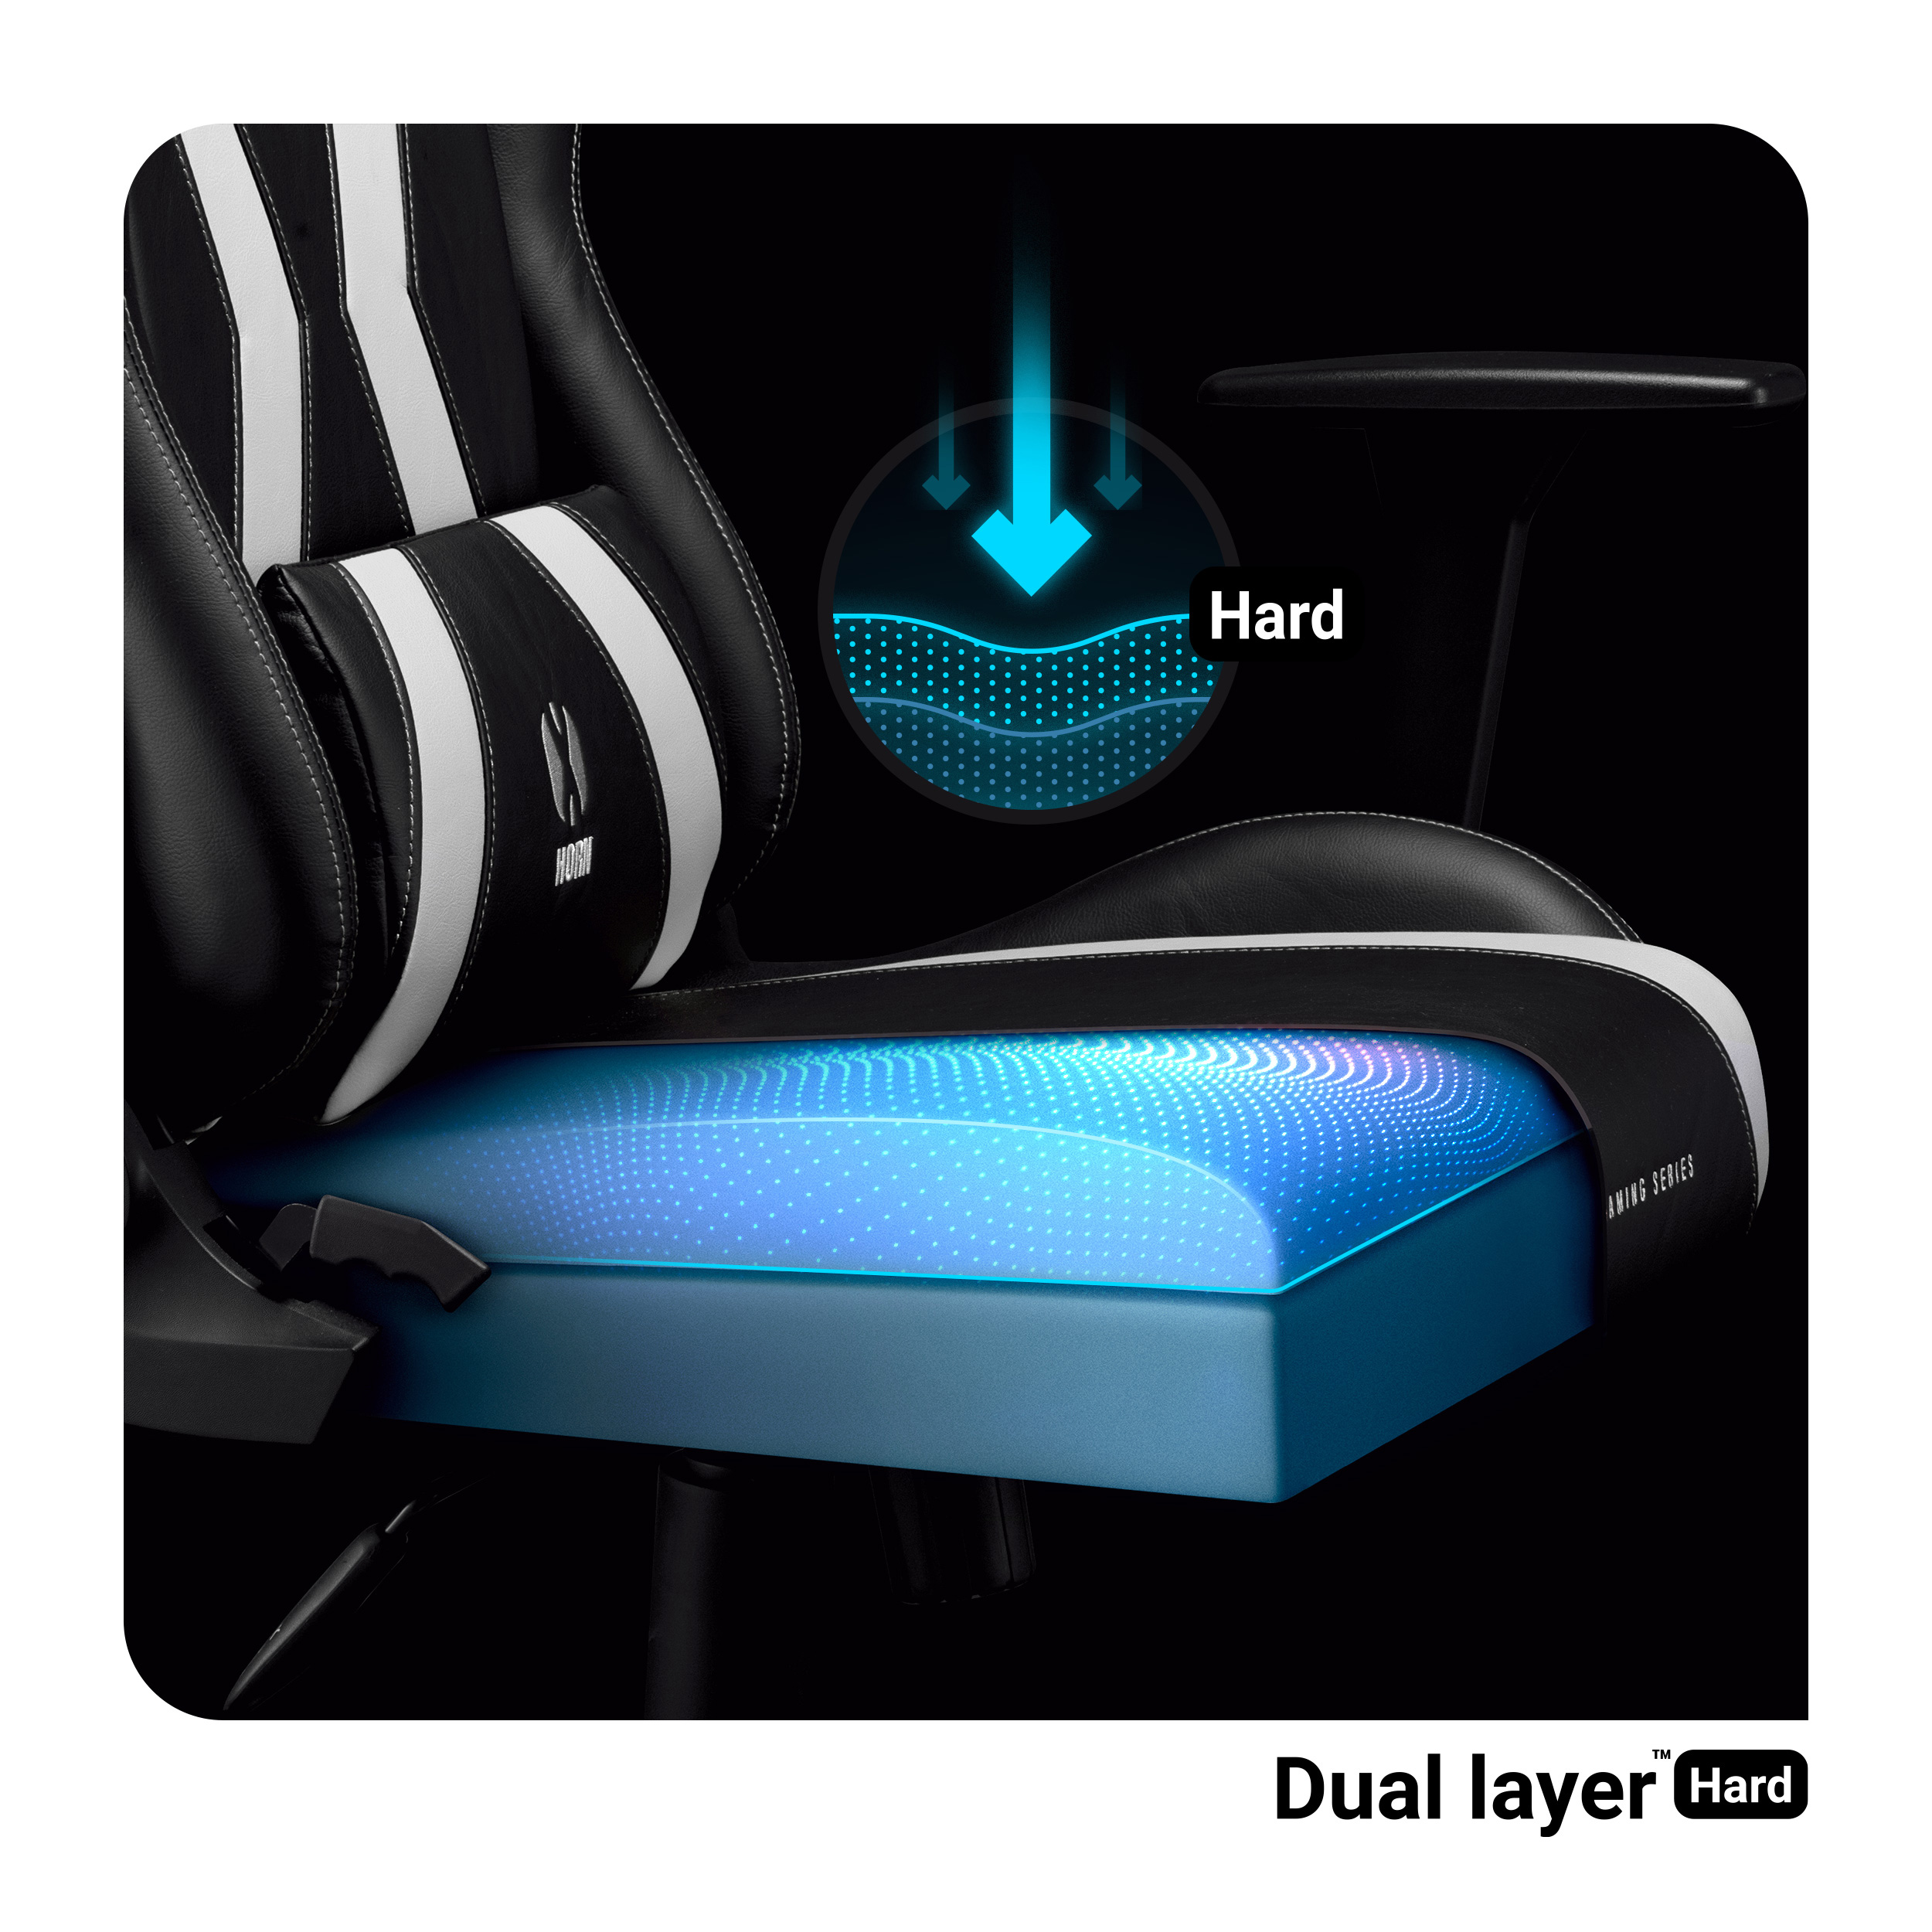 DIABLO CHAIRS NORMAL STUHL X-HORN Gaming black/white GAMING Chair, 2.0